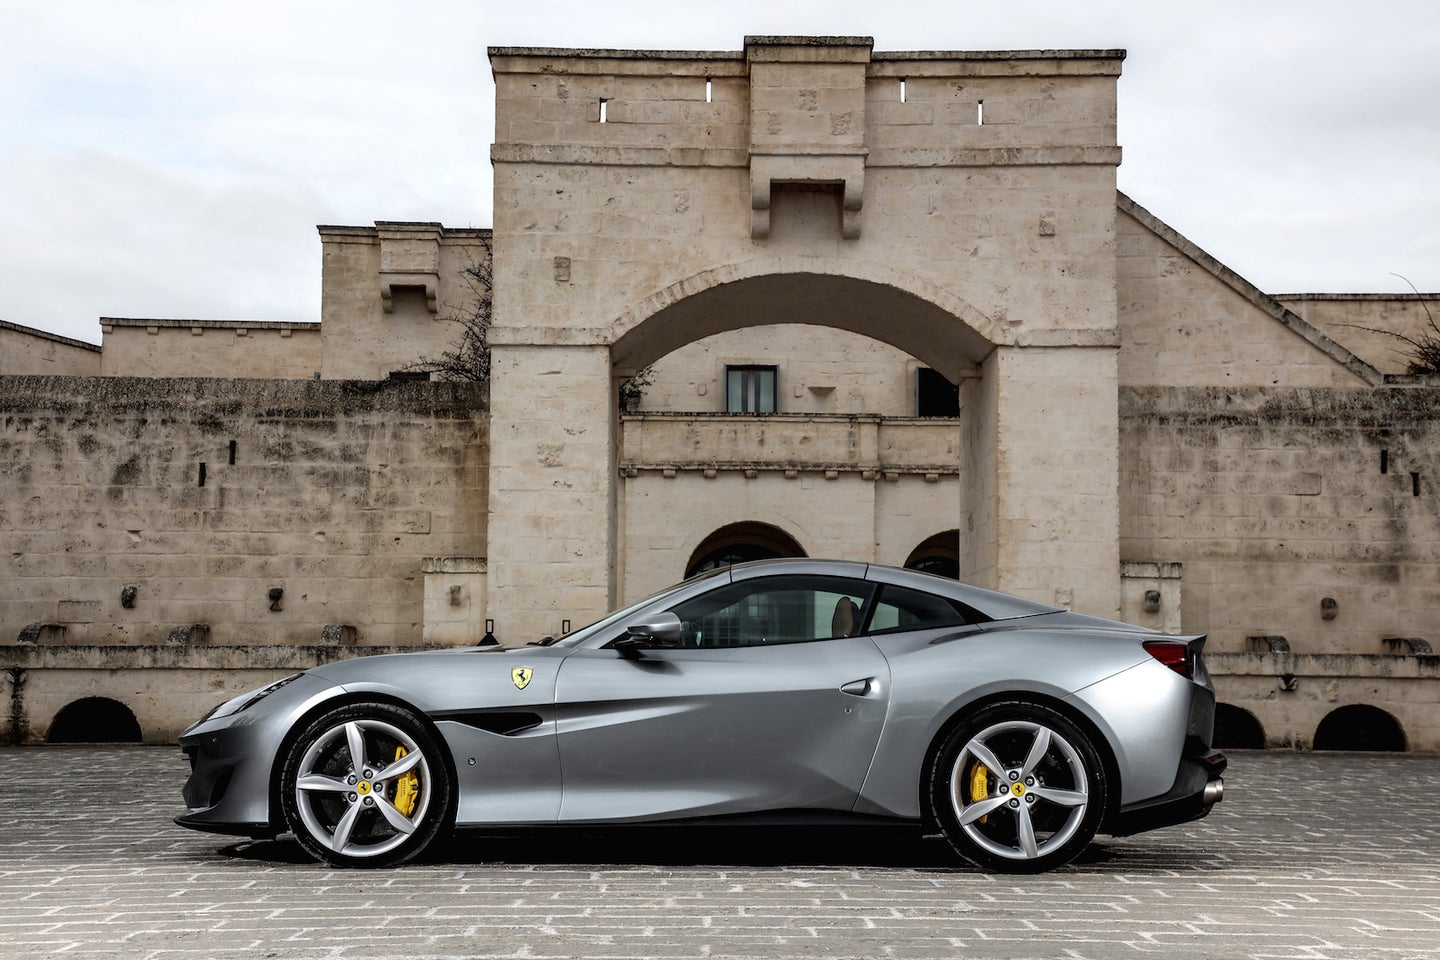 The Ferrari Portofino: A 600-Horsepower “Entry-Level” Dynamo